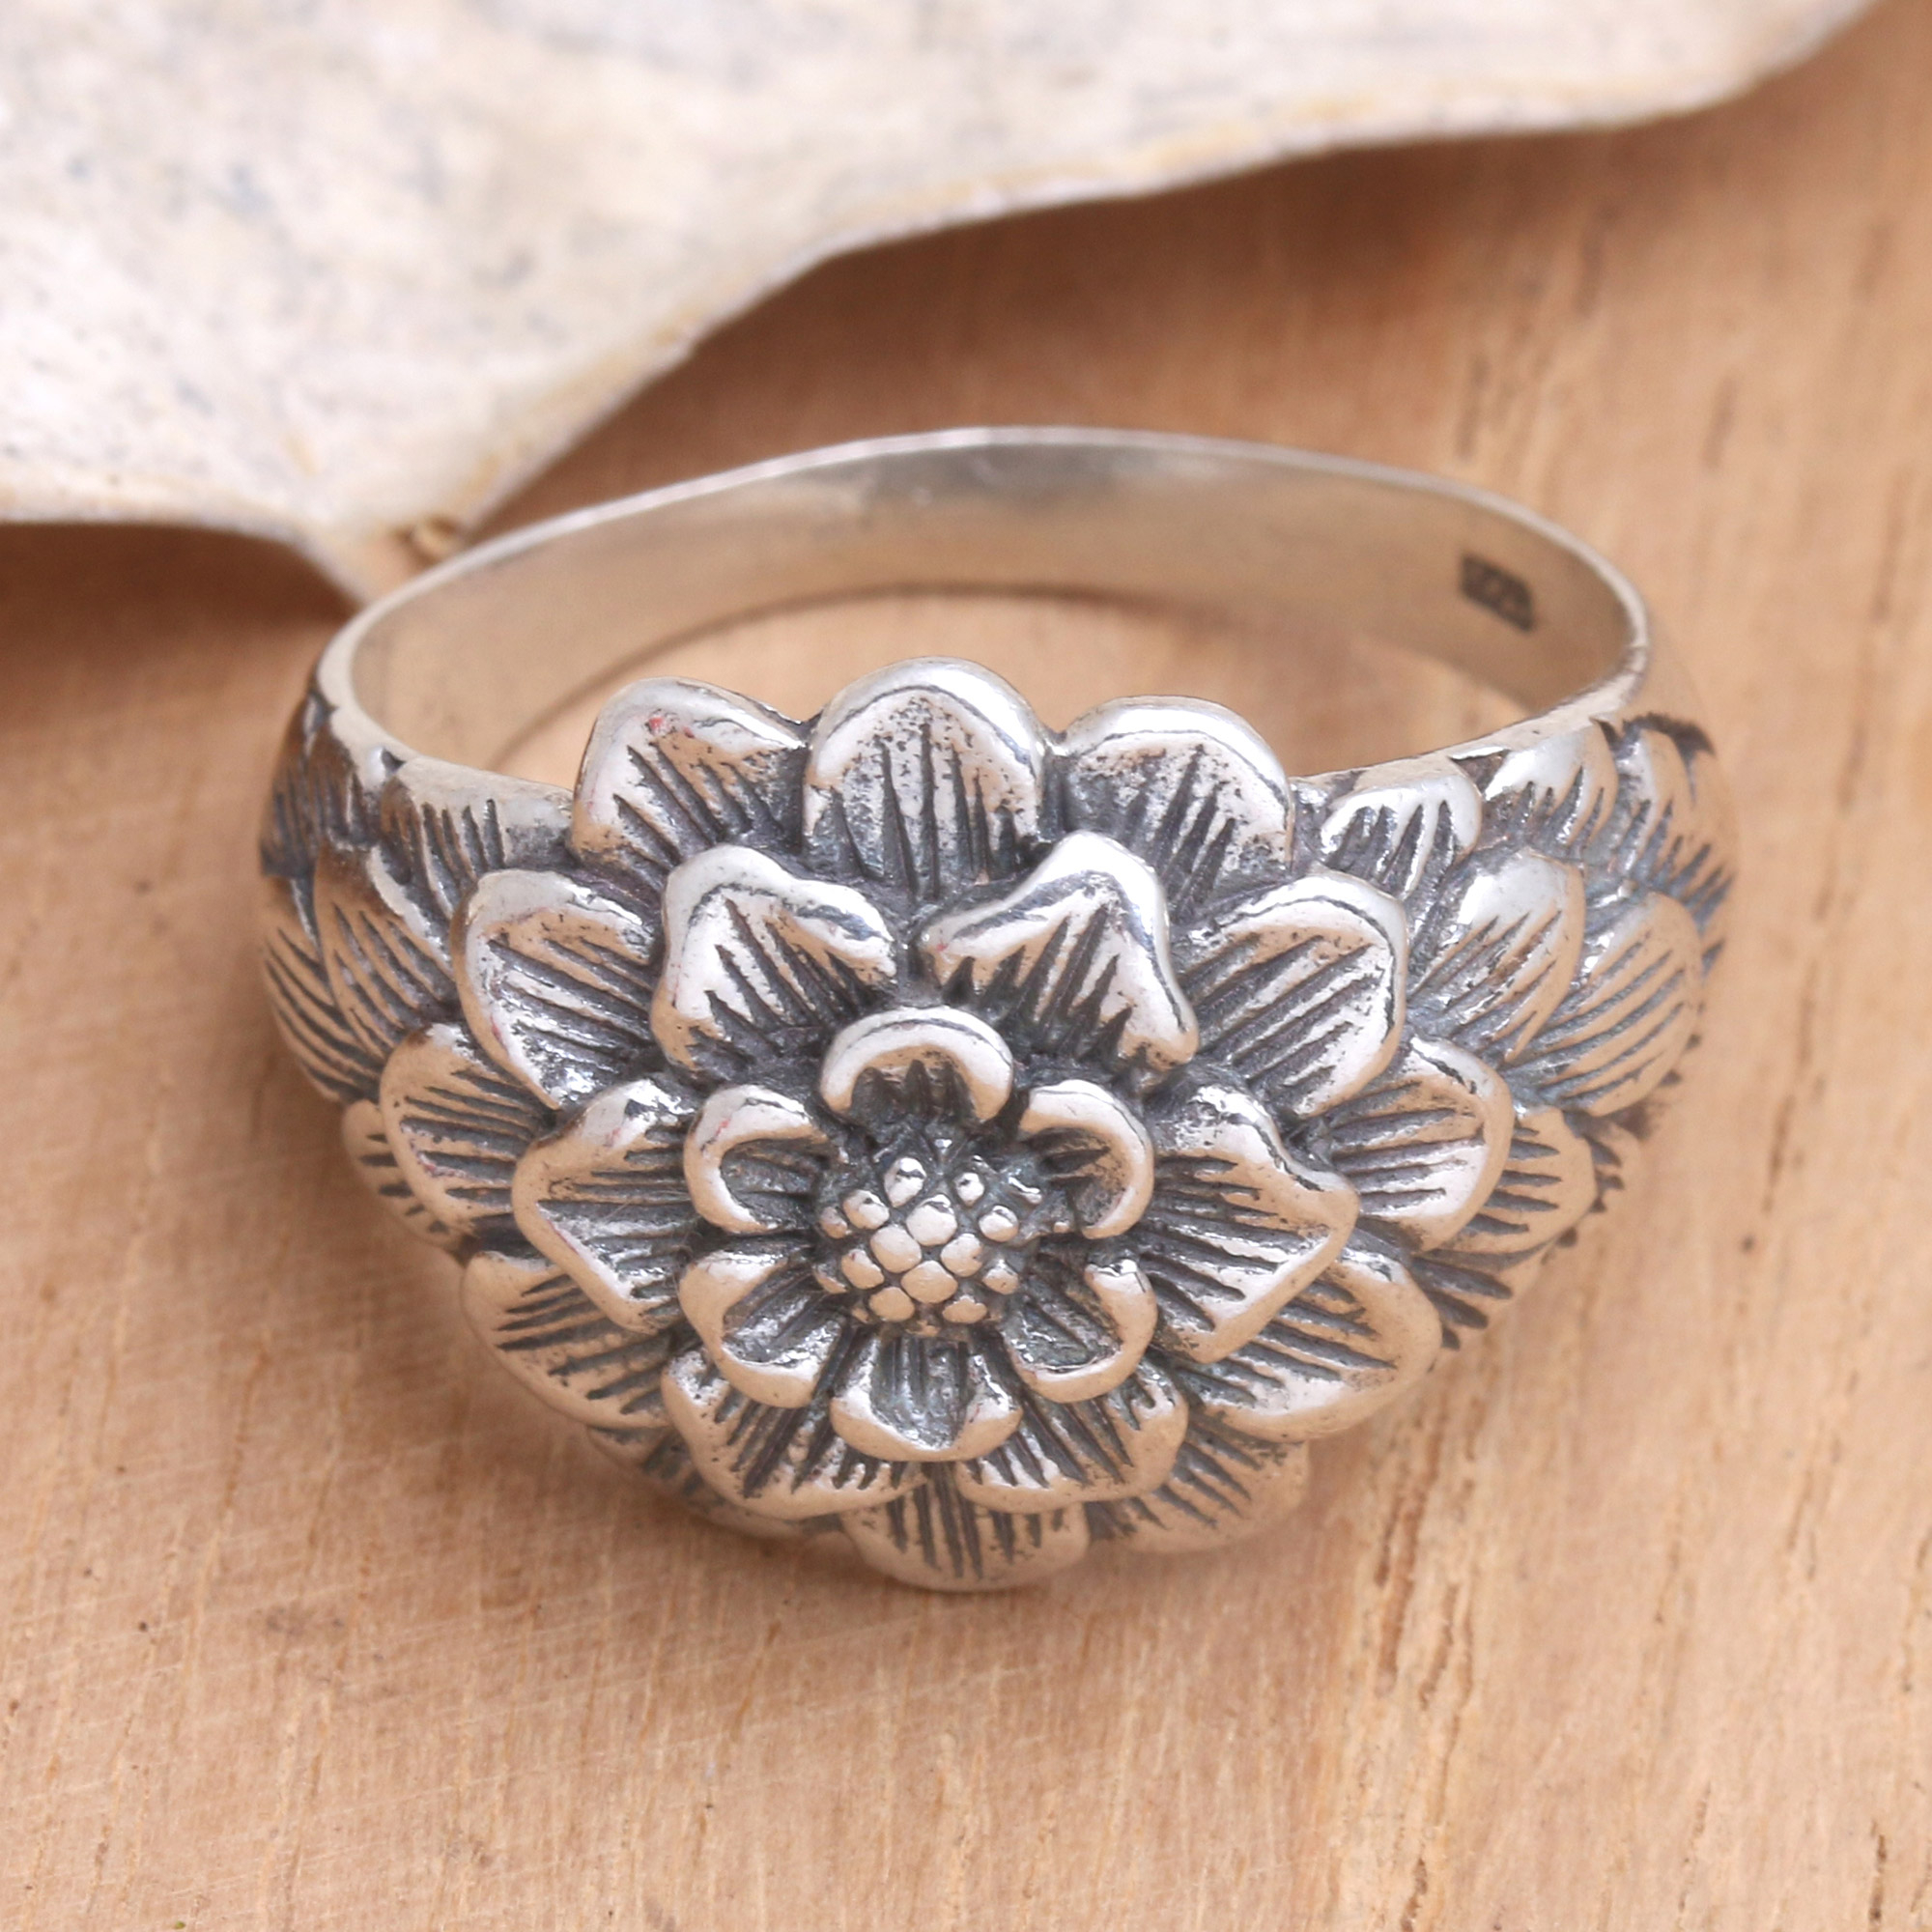 Flower Band Sunflower Ring Handmade Sterling Silver Unique Jewelry Flower Jewelry Flower Ring Ring with Flowers Flower Pattern Ring